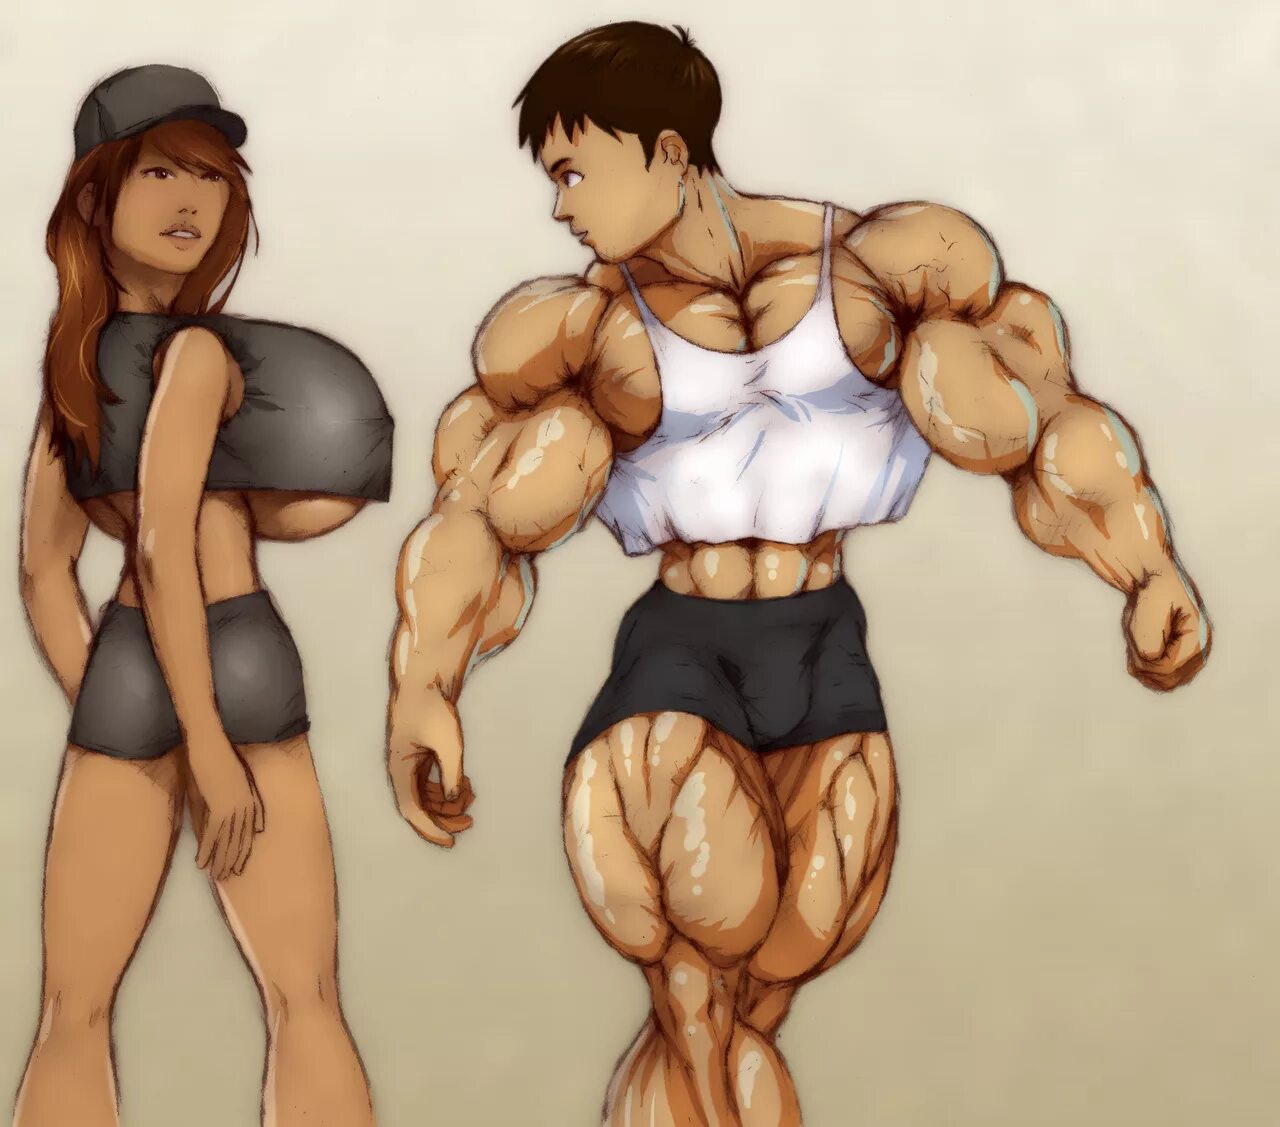 Dick expansion. FMG muscle growth Transformations мальчиков. Девочка с гигантскими мускулами.